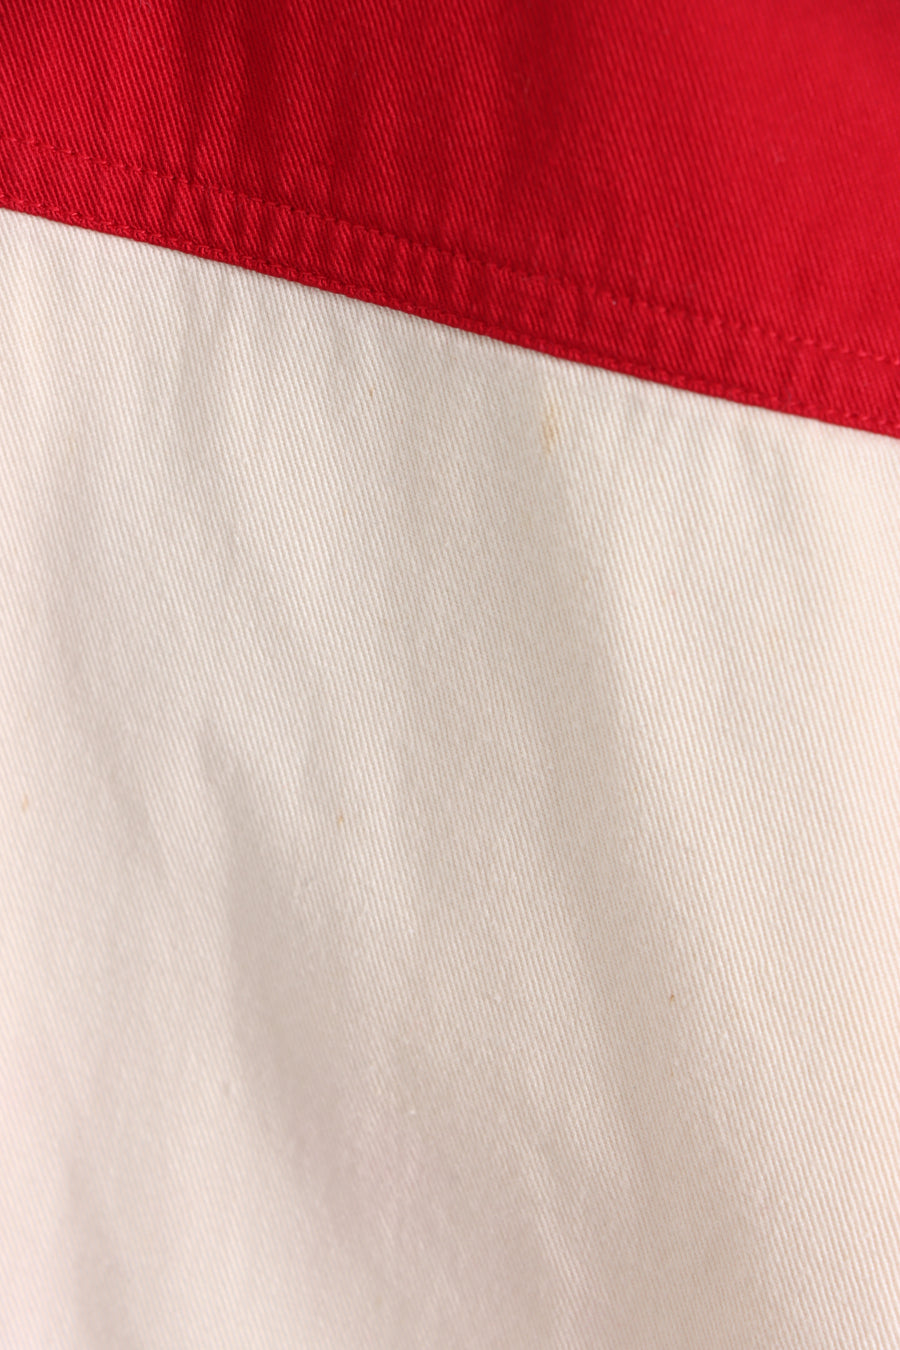 TOMMY HILFIGER JEANS Crest Logo American Flag Colour Block Shirt (XXL)